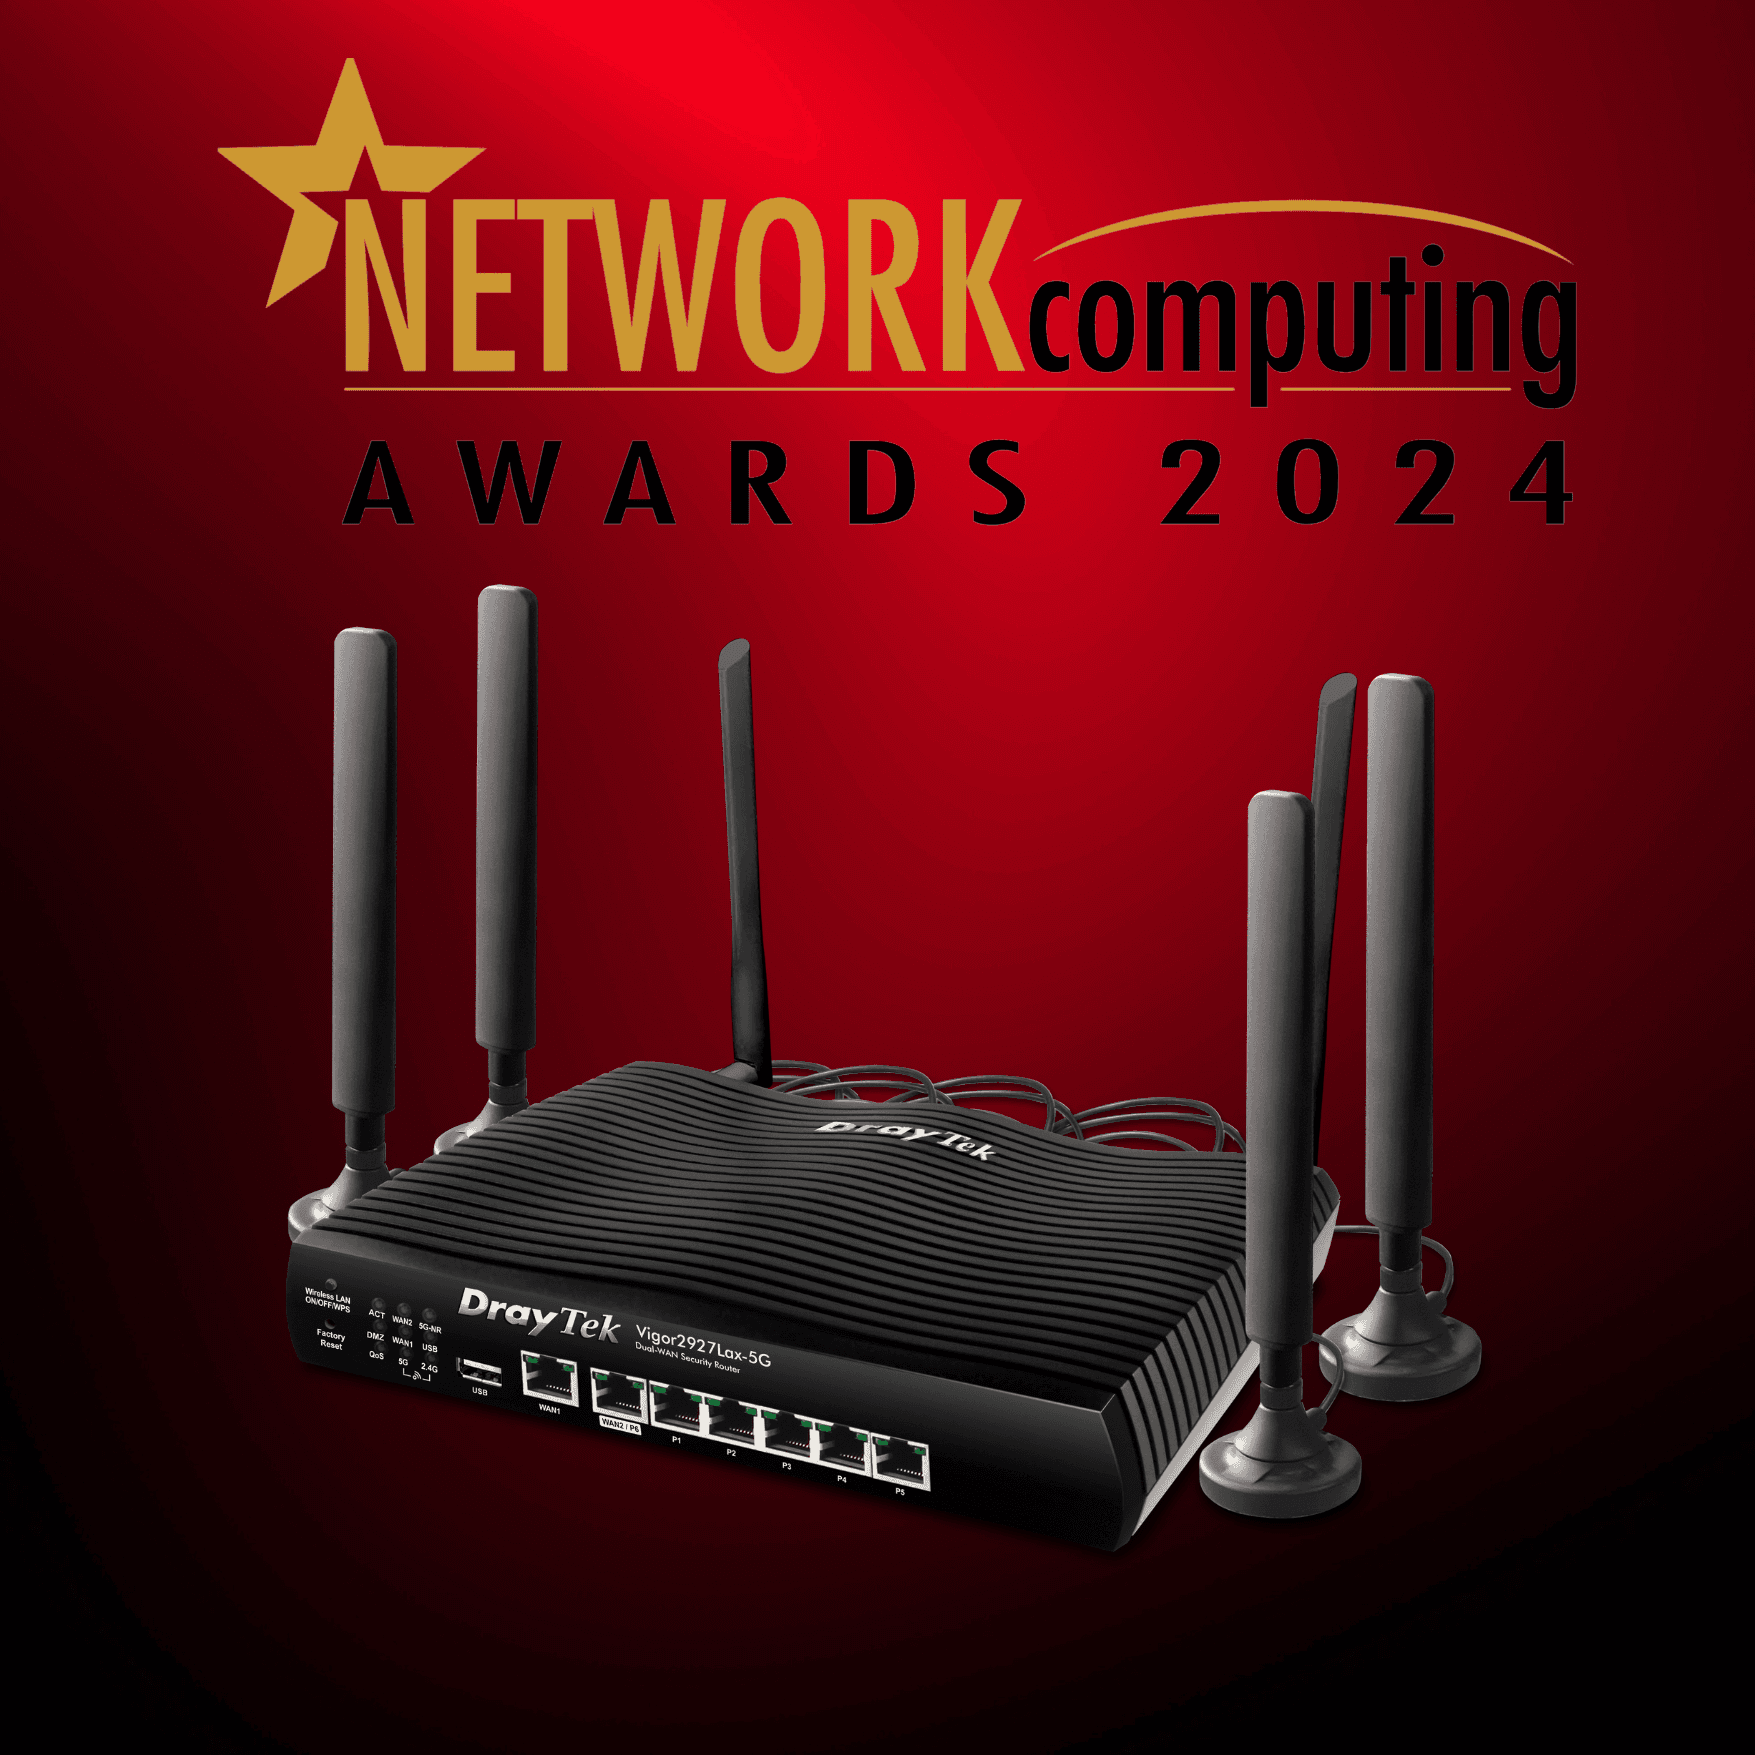 DrayTek Vigor 2927LAX-5G Wins Network Computing Awards' Product of the Year